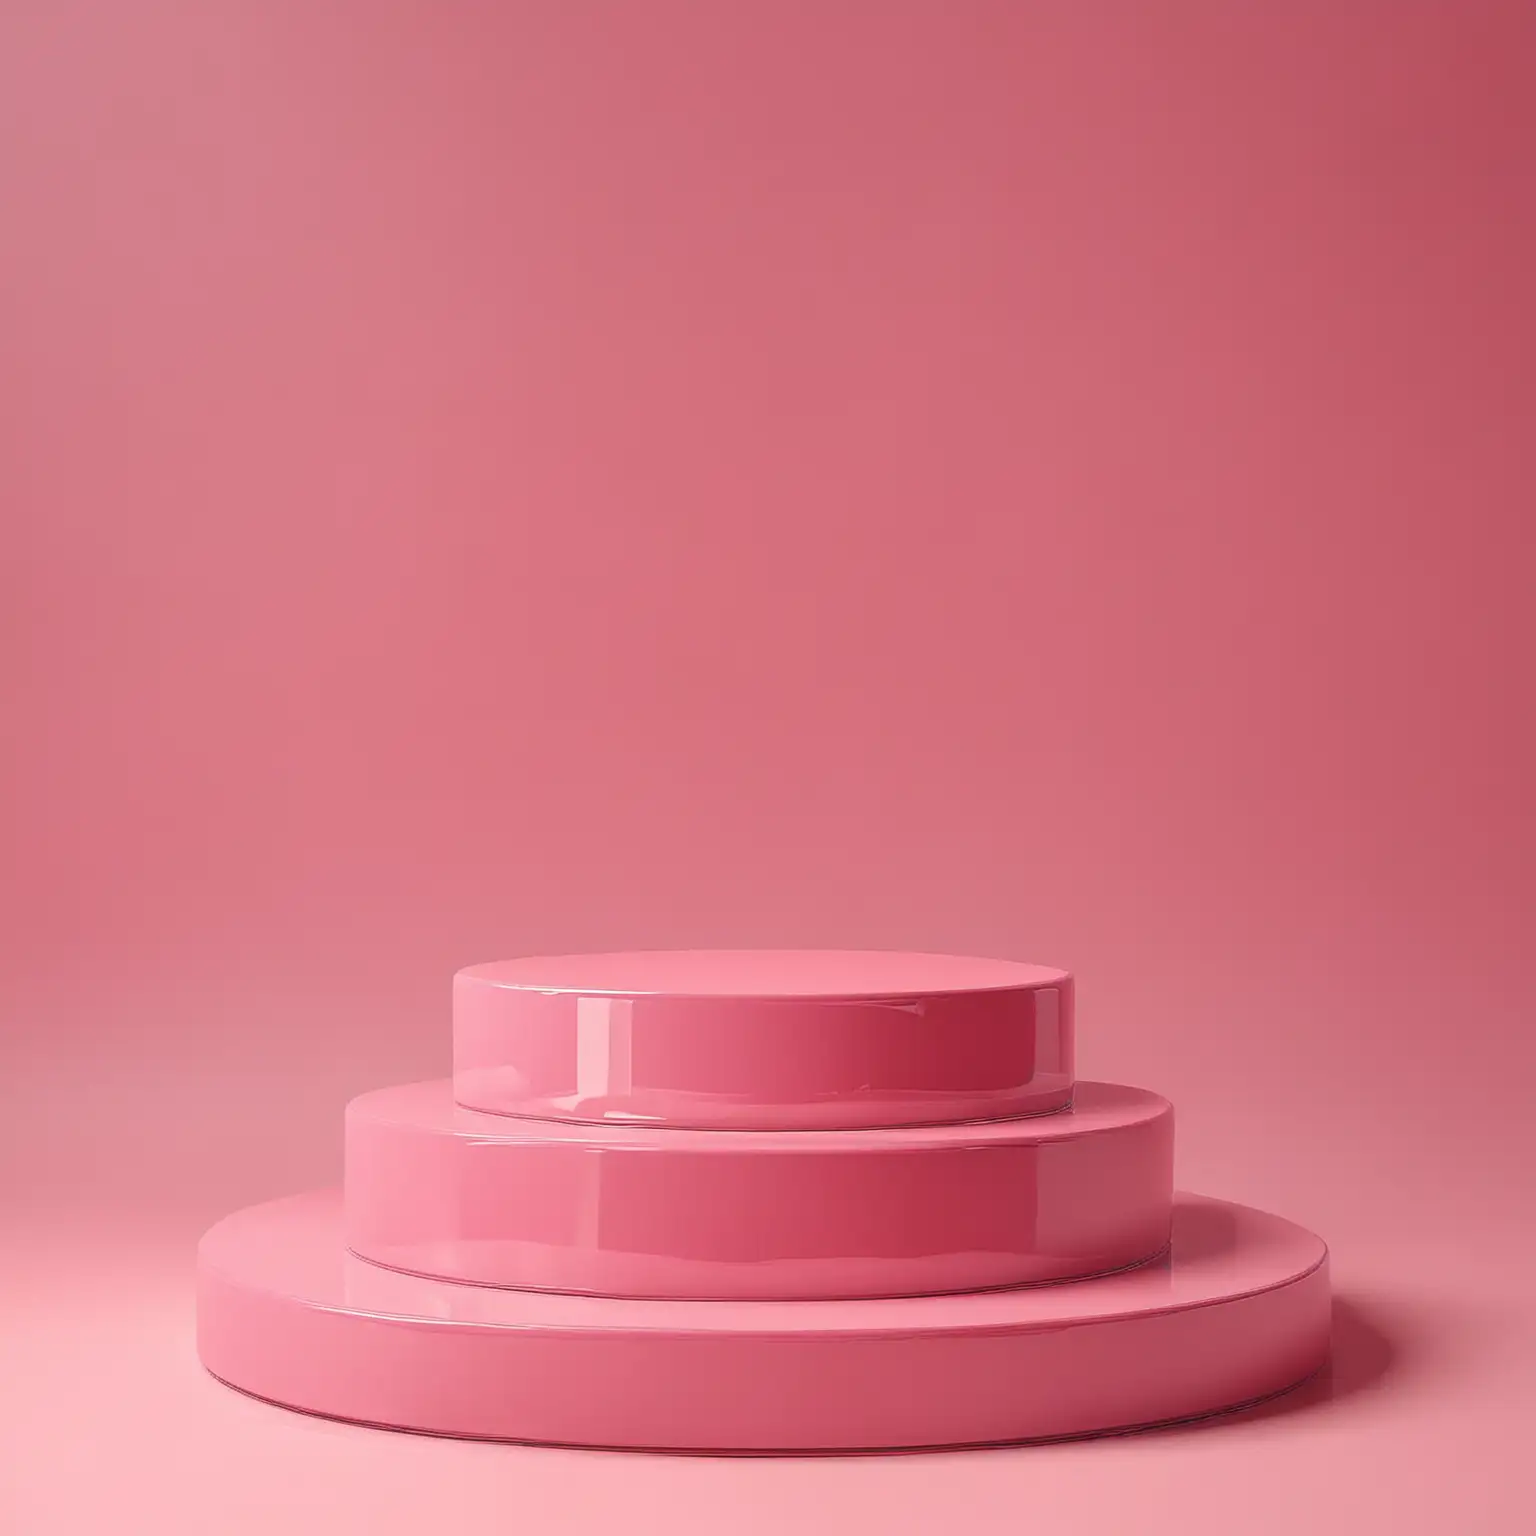 Glossy Pink Podium on Vibrant Pink Background